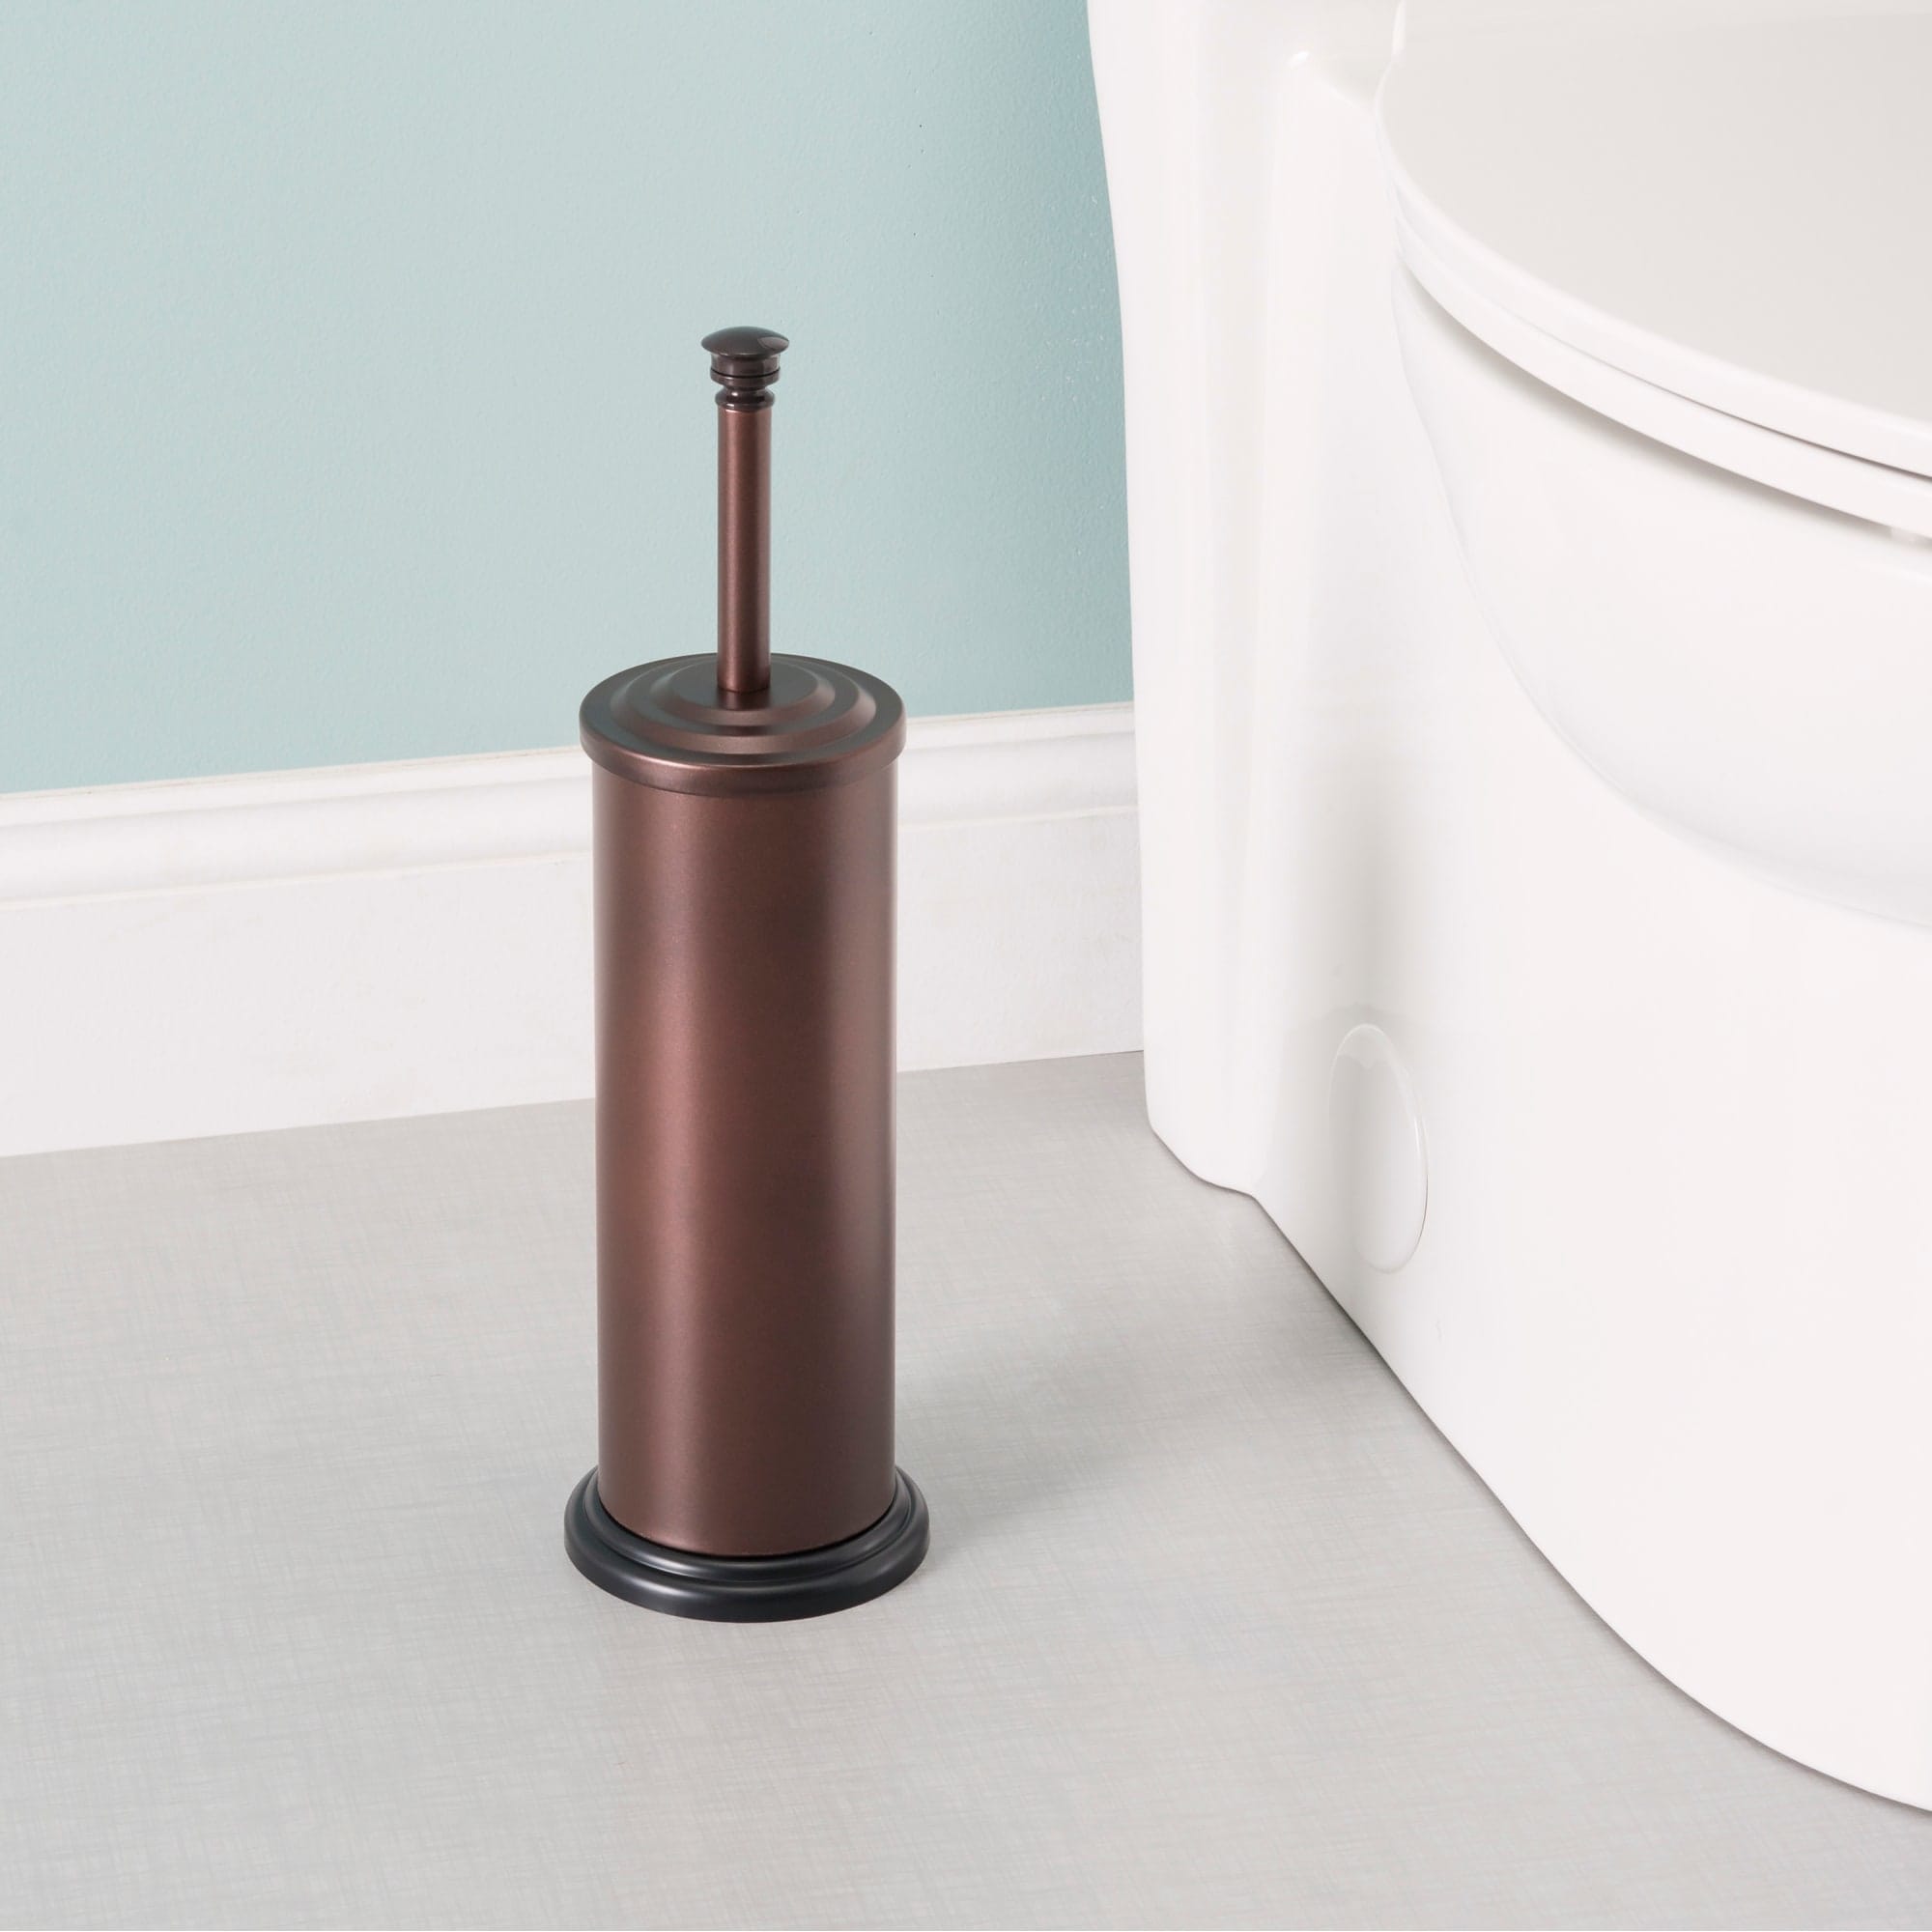 Home Basics Hideaway Tall Toilet Brush Holder with Steel Handled Brush, Bronze $5.00 EACH, CASE PACK OF 12